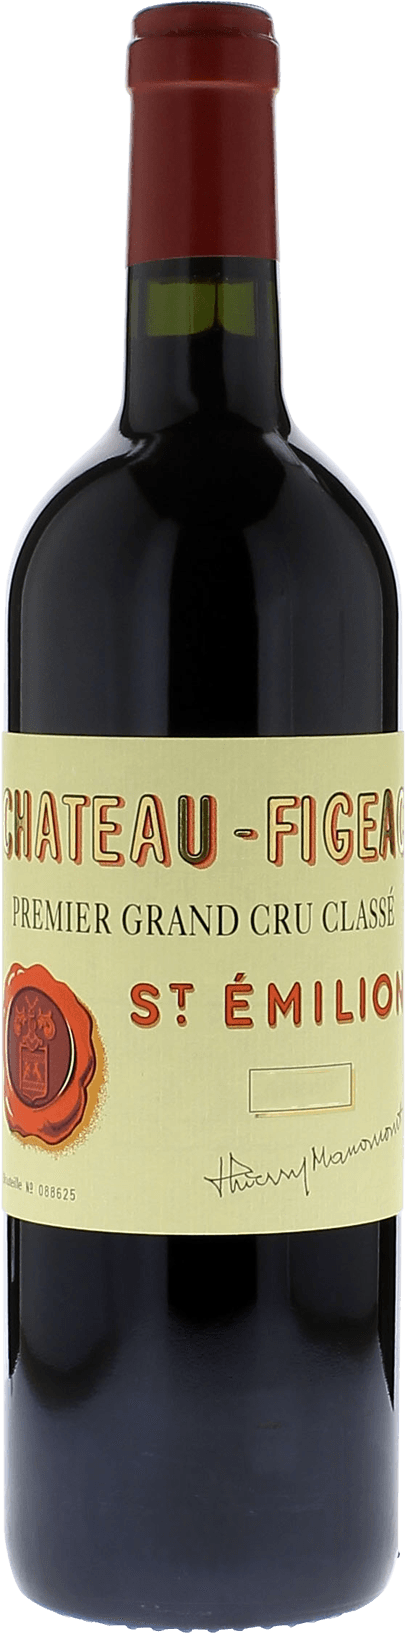 Figeac 1948 1er Grand cru B class Saint-Emilion, Bordeaux rouge